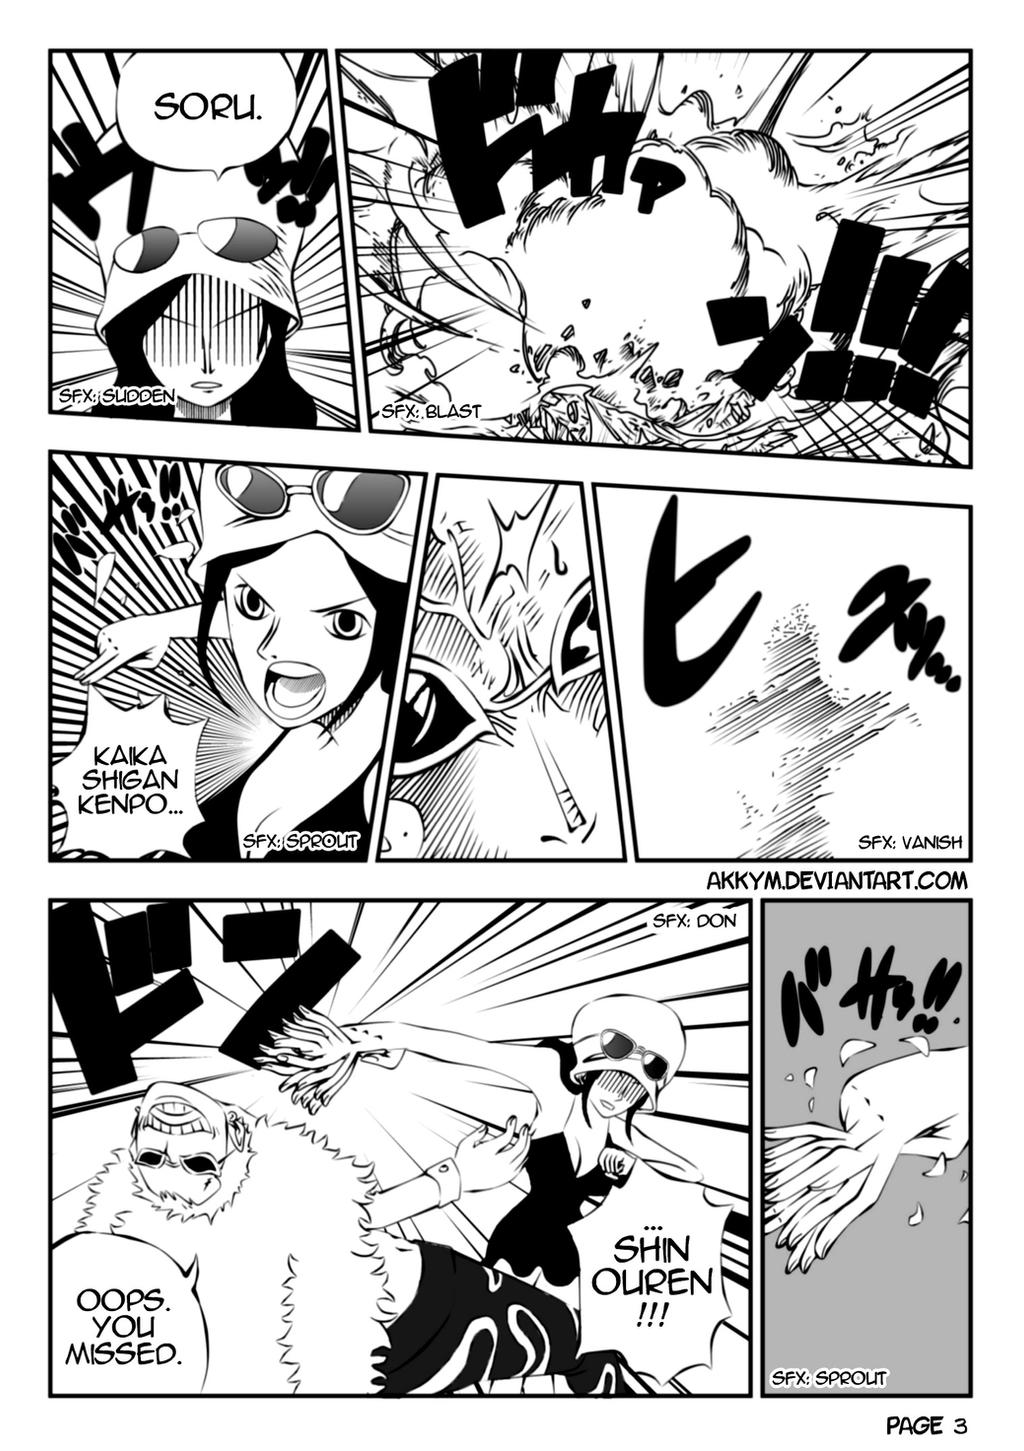 Rokushiki Robin illustrations (part 11) + Page 5 of the Robin: The Rokushiki  Demon fan manga!